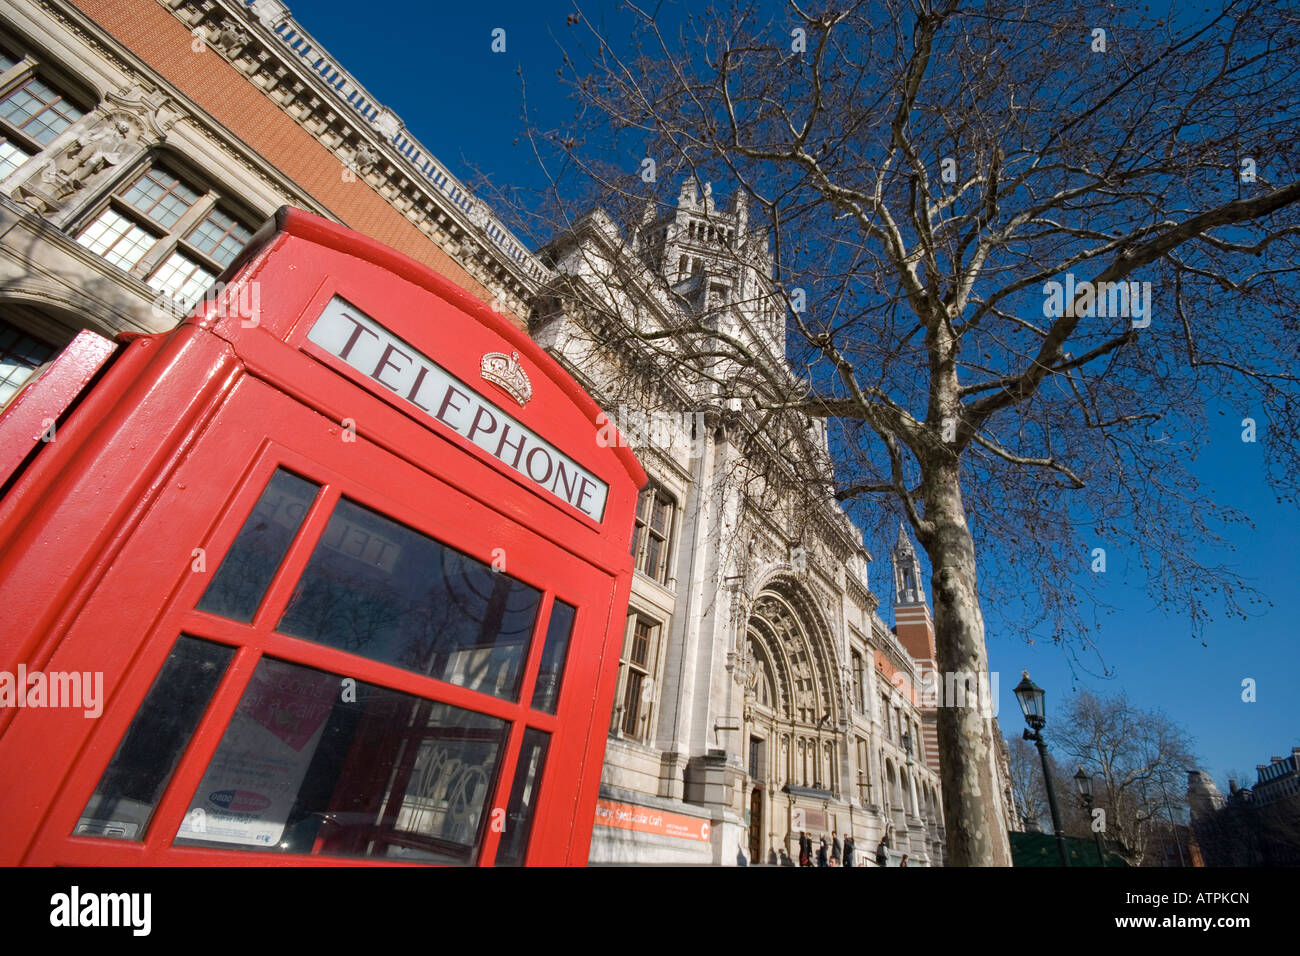 Victoria and Albert Museum, London, UK Stock Photo